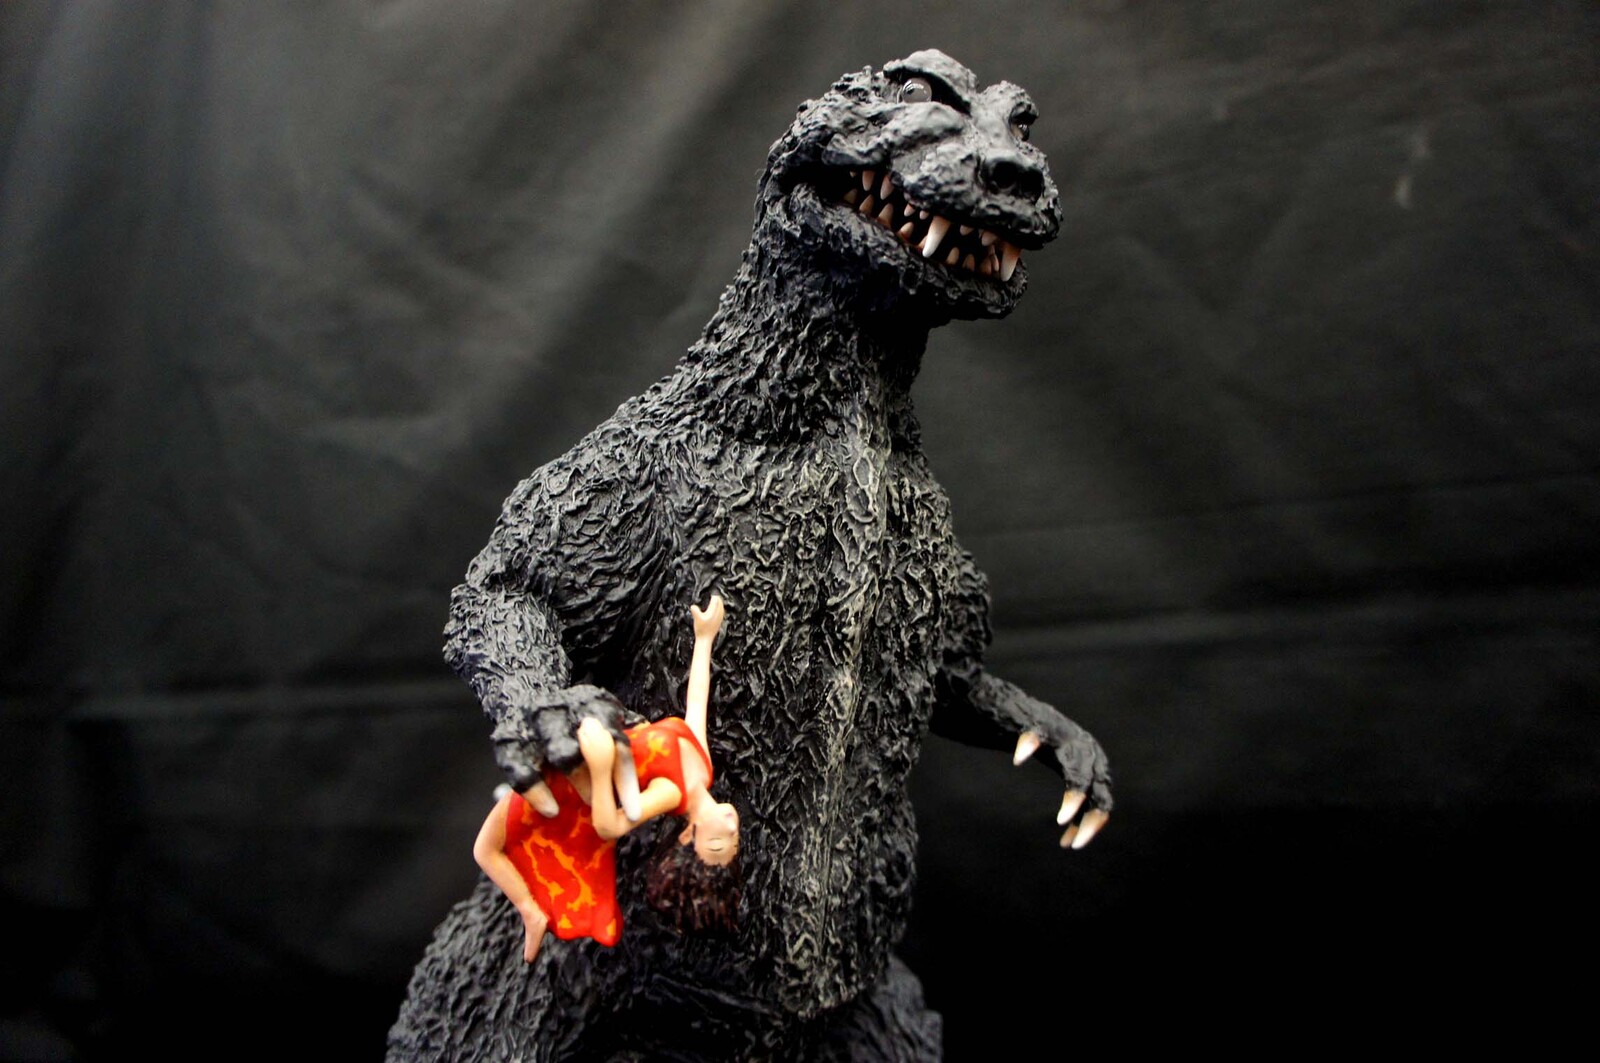 54 Godzilla pamphlet poster version Art Statue 
ゴジラ パンフレット ポスター版  完成品
https://www.solidart.club